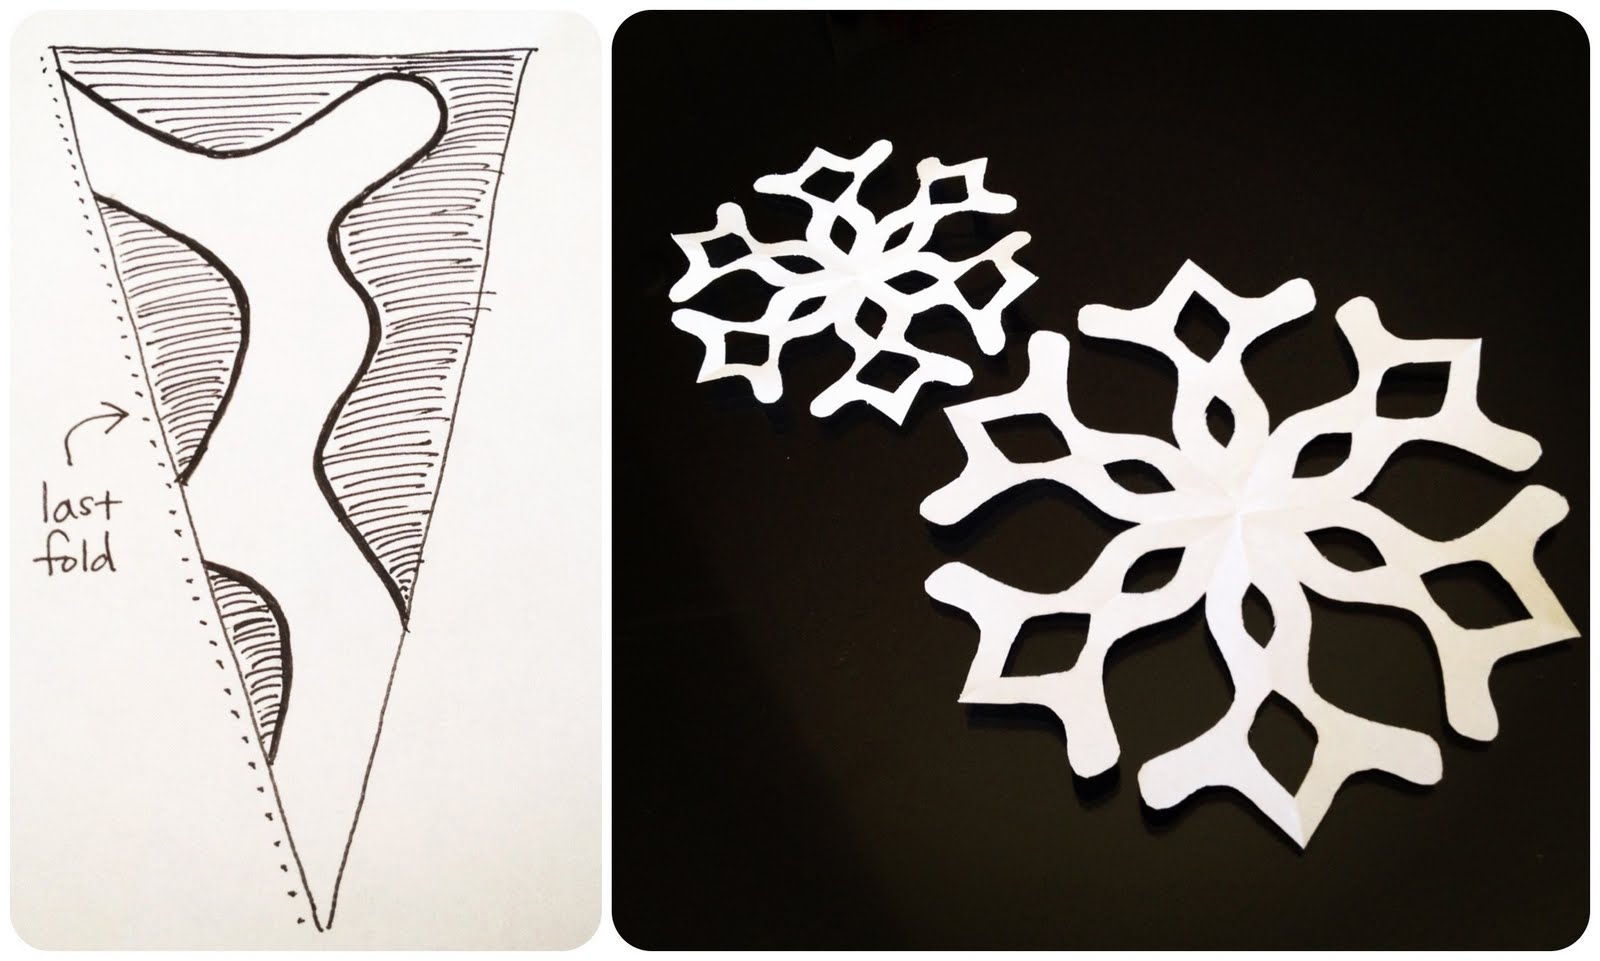 Paper Snowflake Cutouts, 16 - Snowflakes 